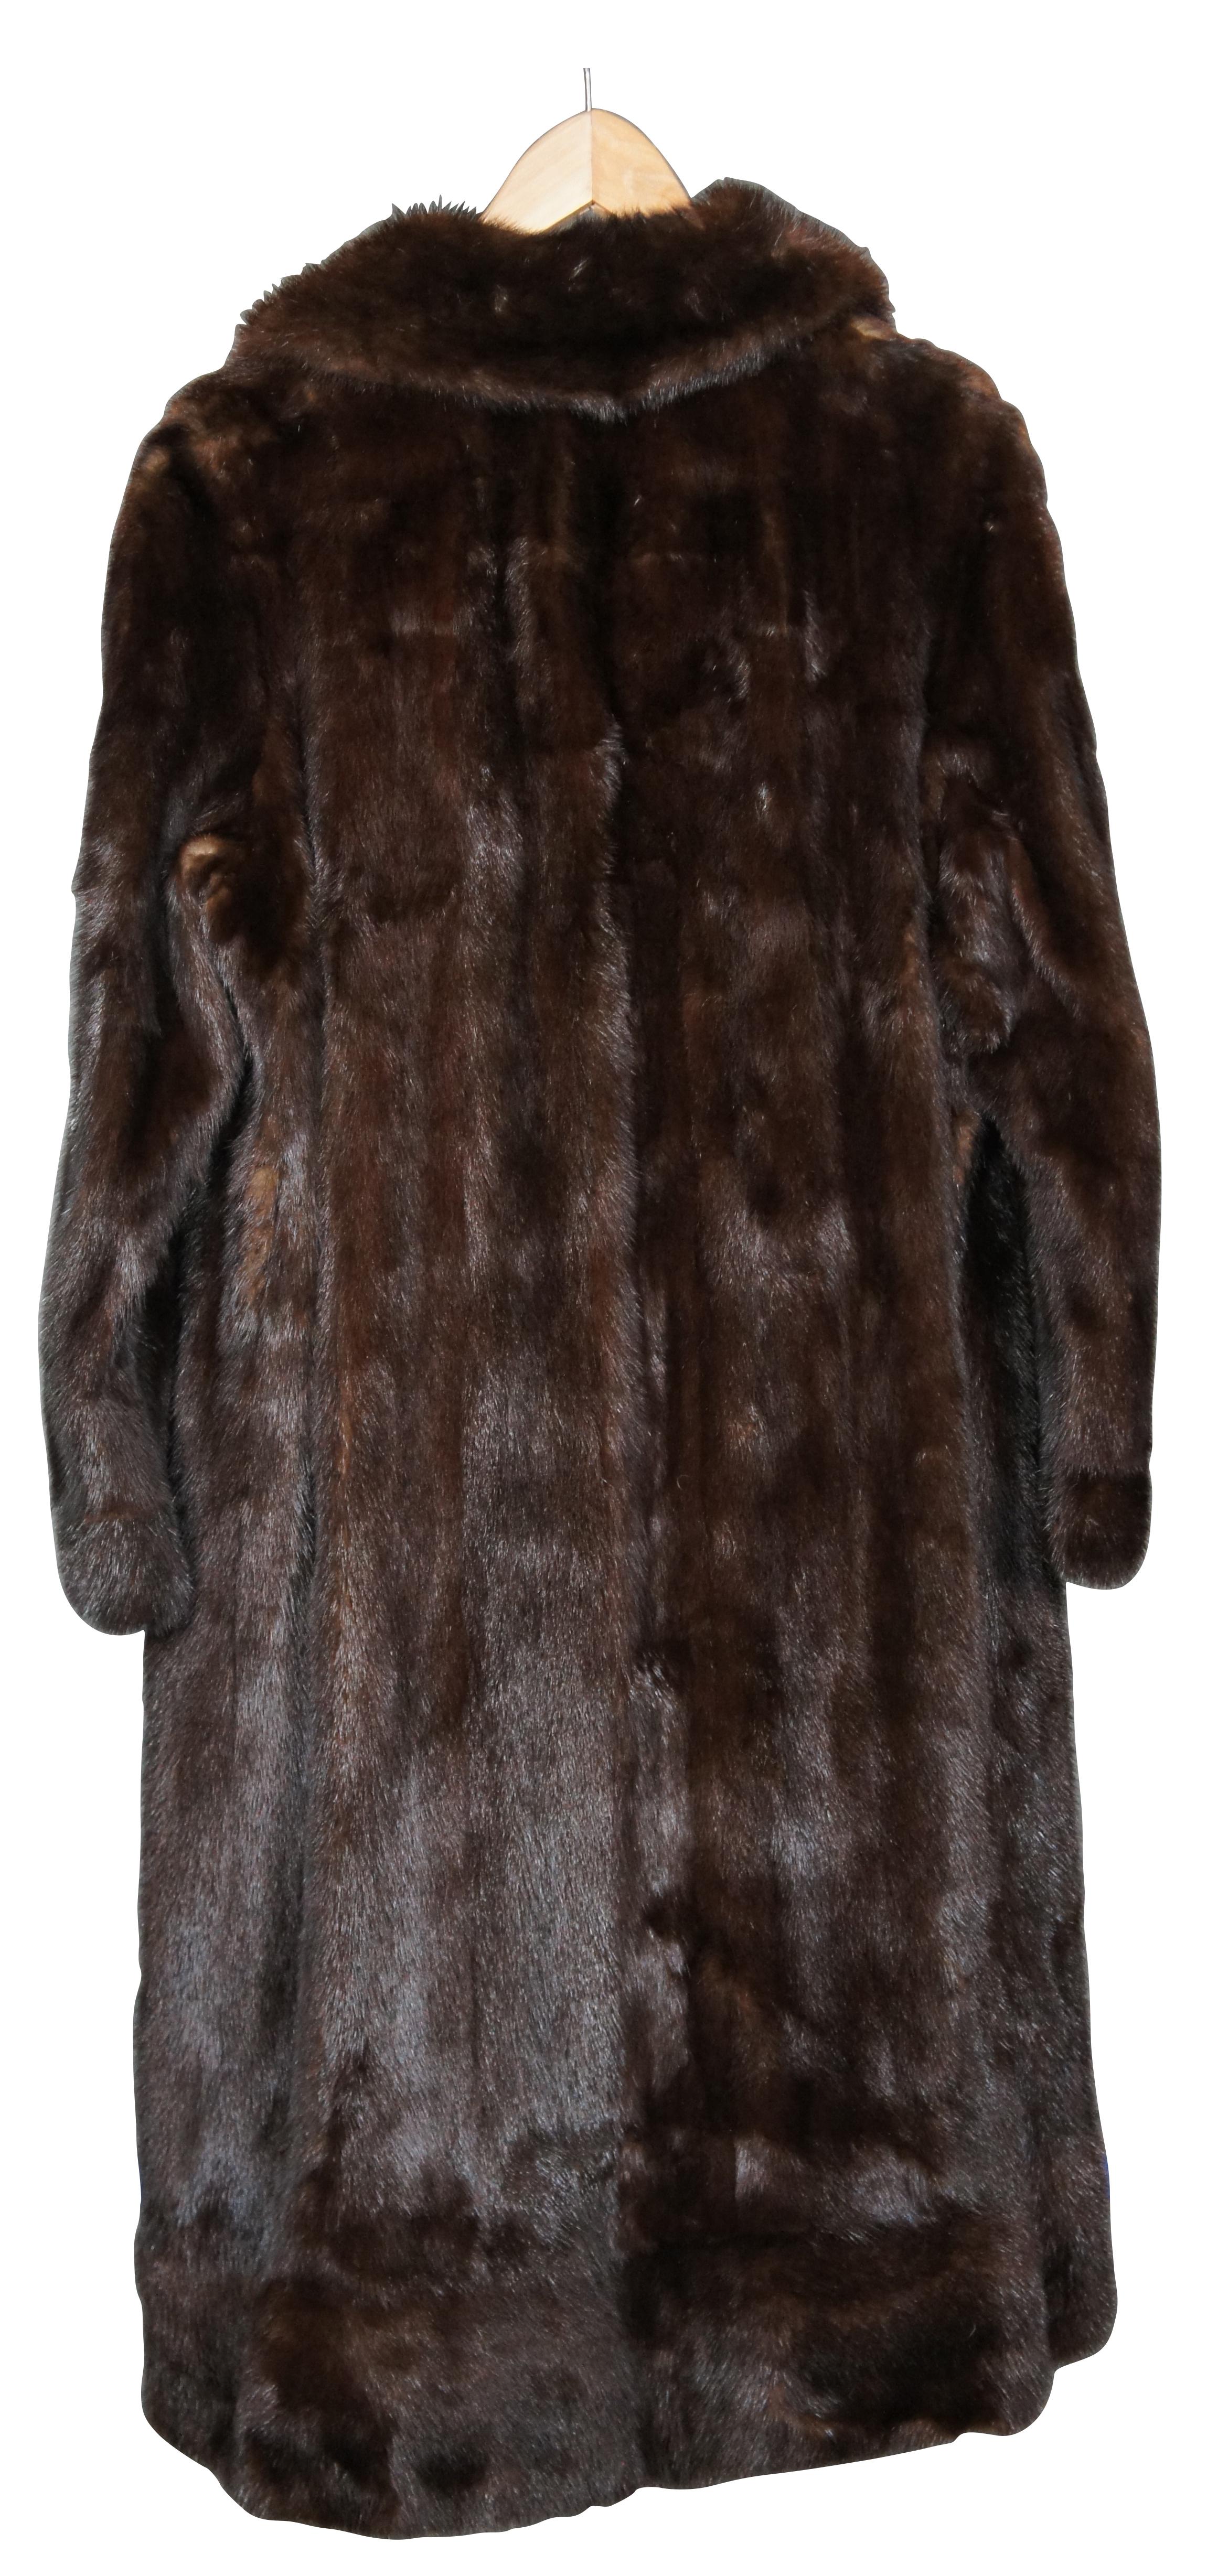 button on a fur coat